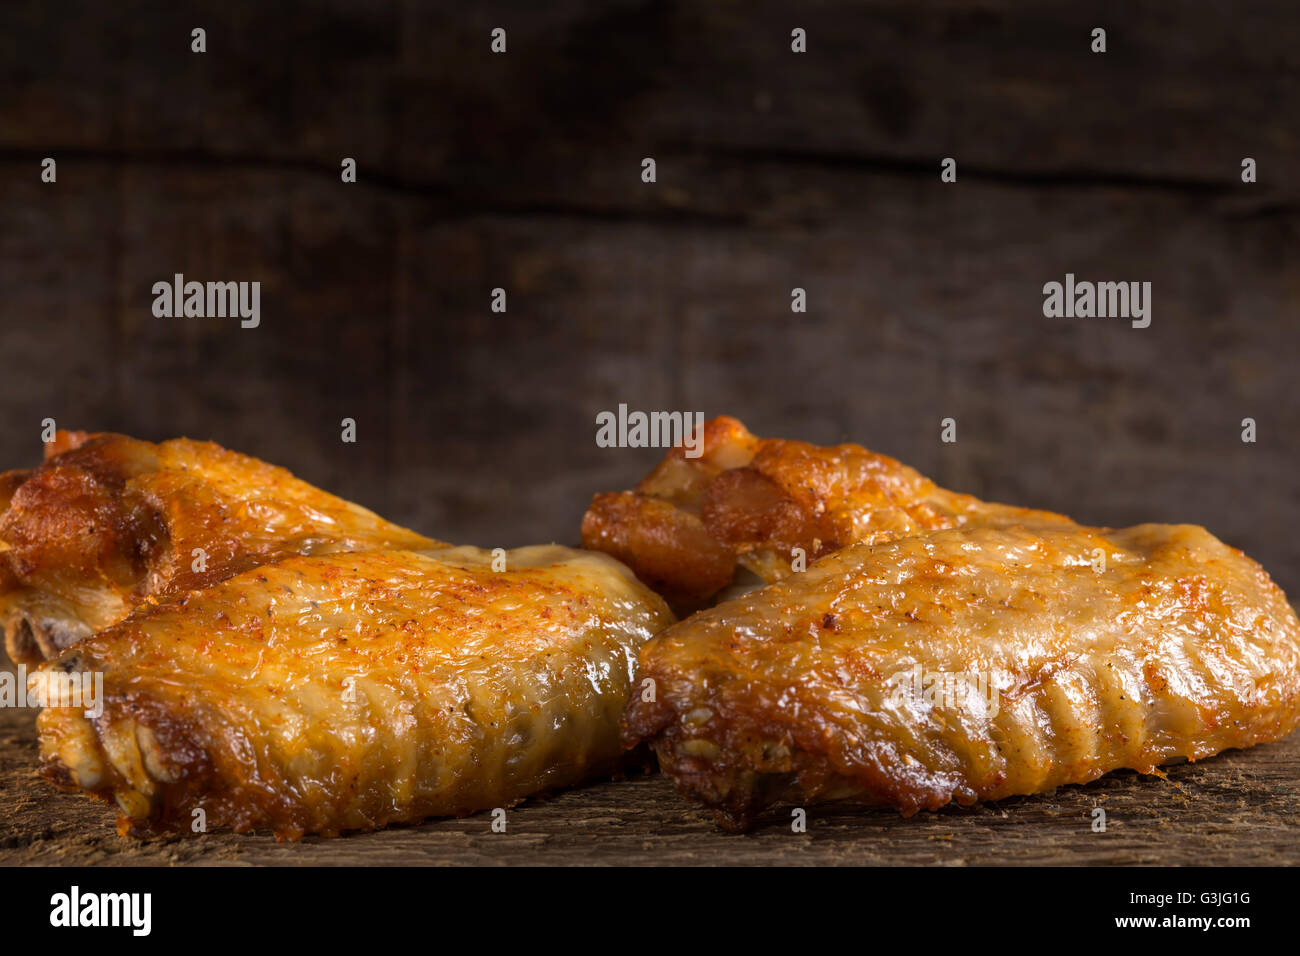 Two fried chicken wings on wood board Stock Photo